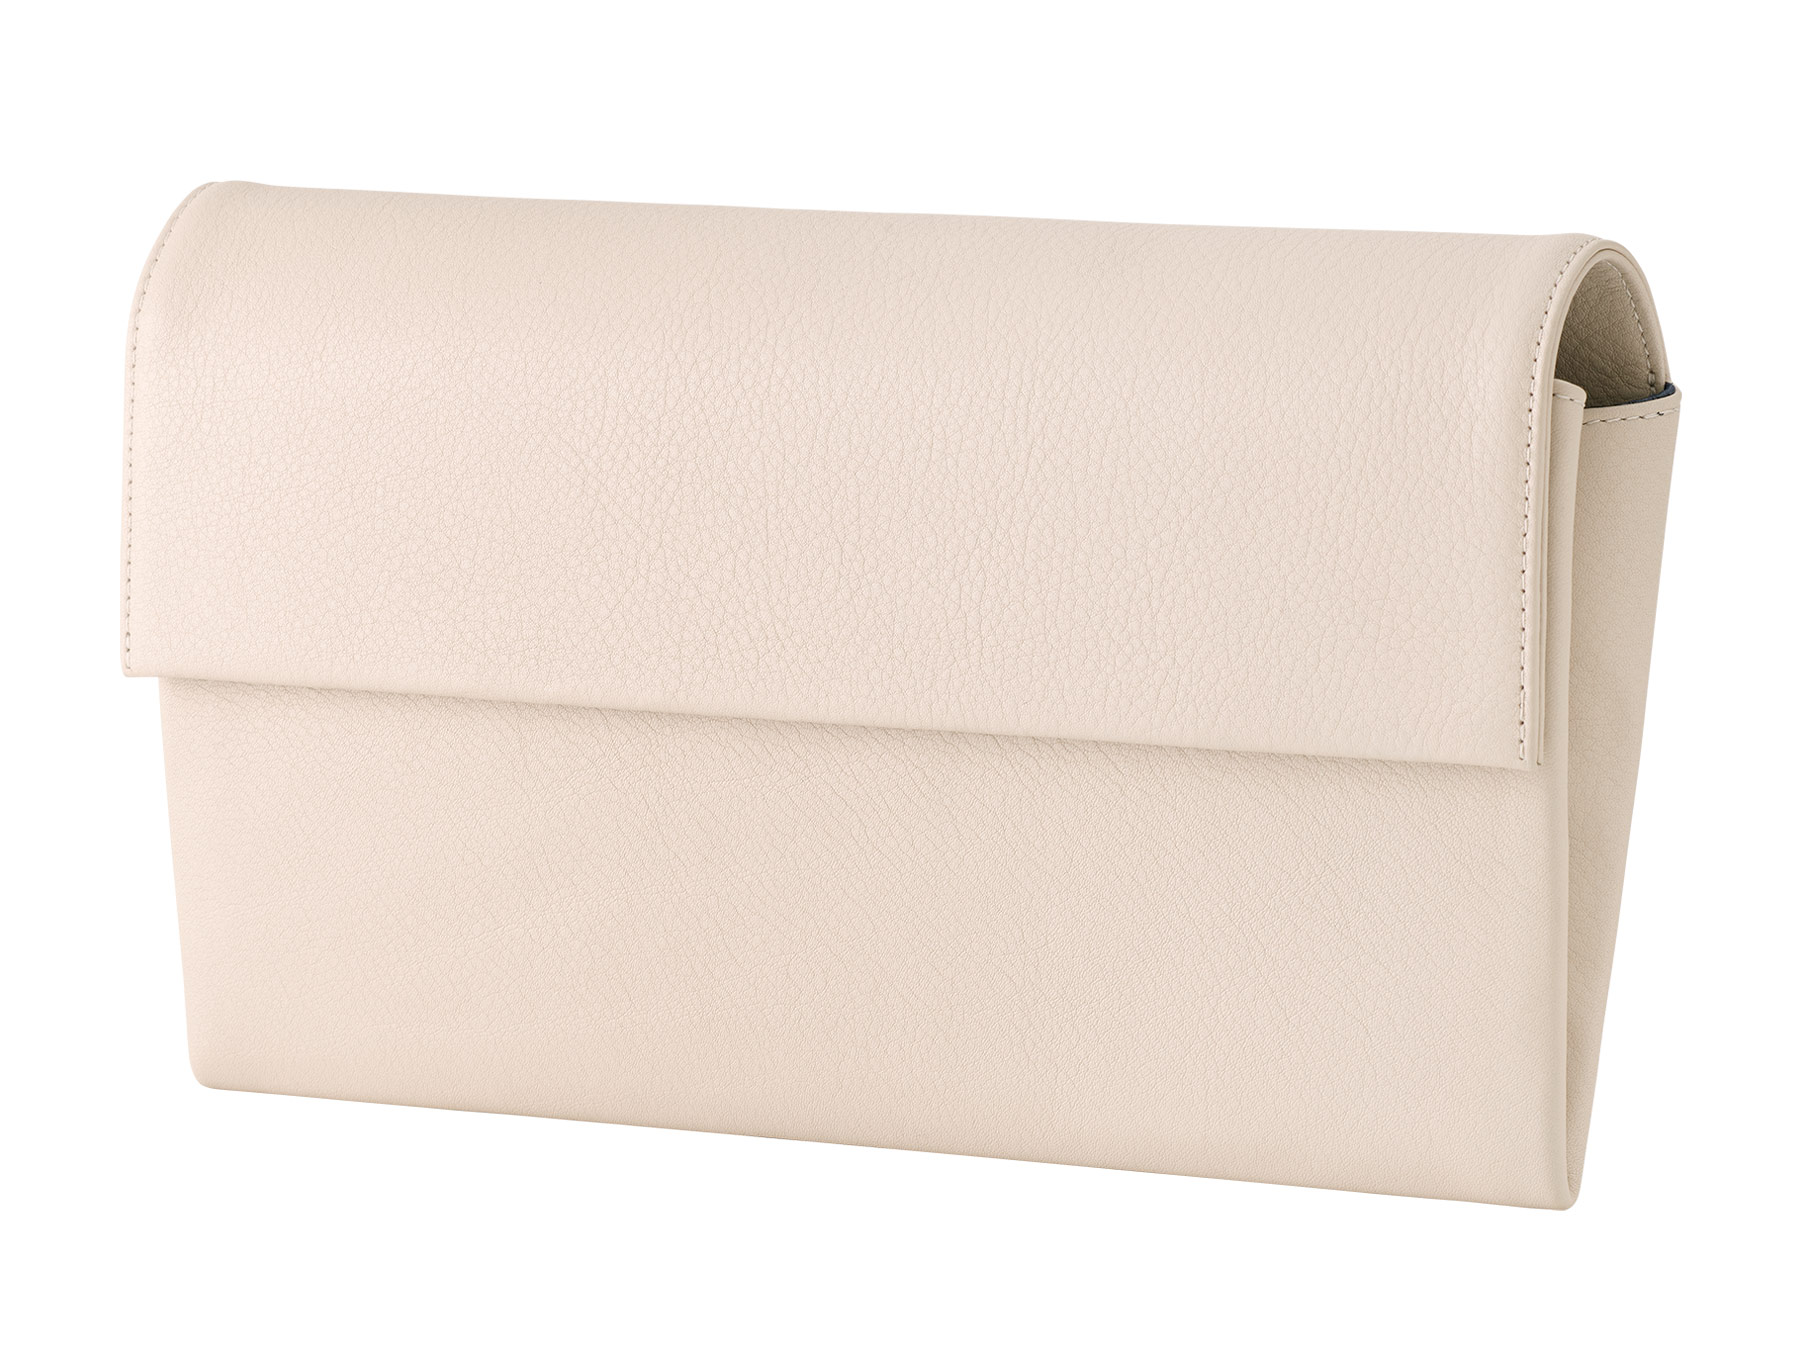 HAZE clutch bag in ivory calfskin leather | TSATSAS